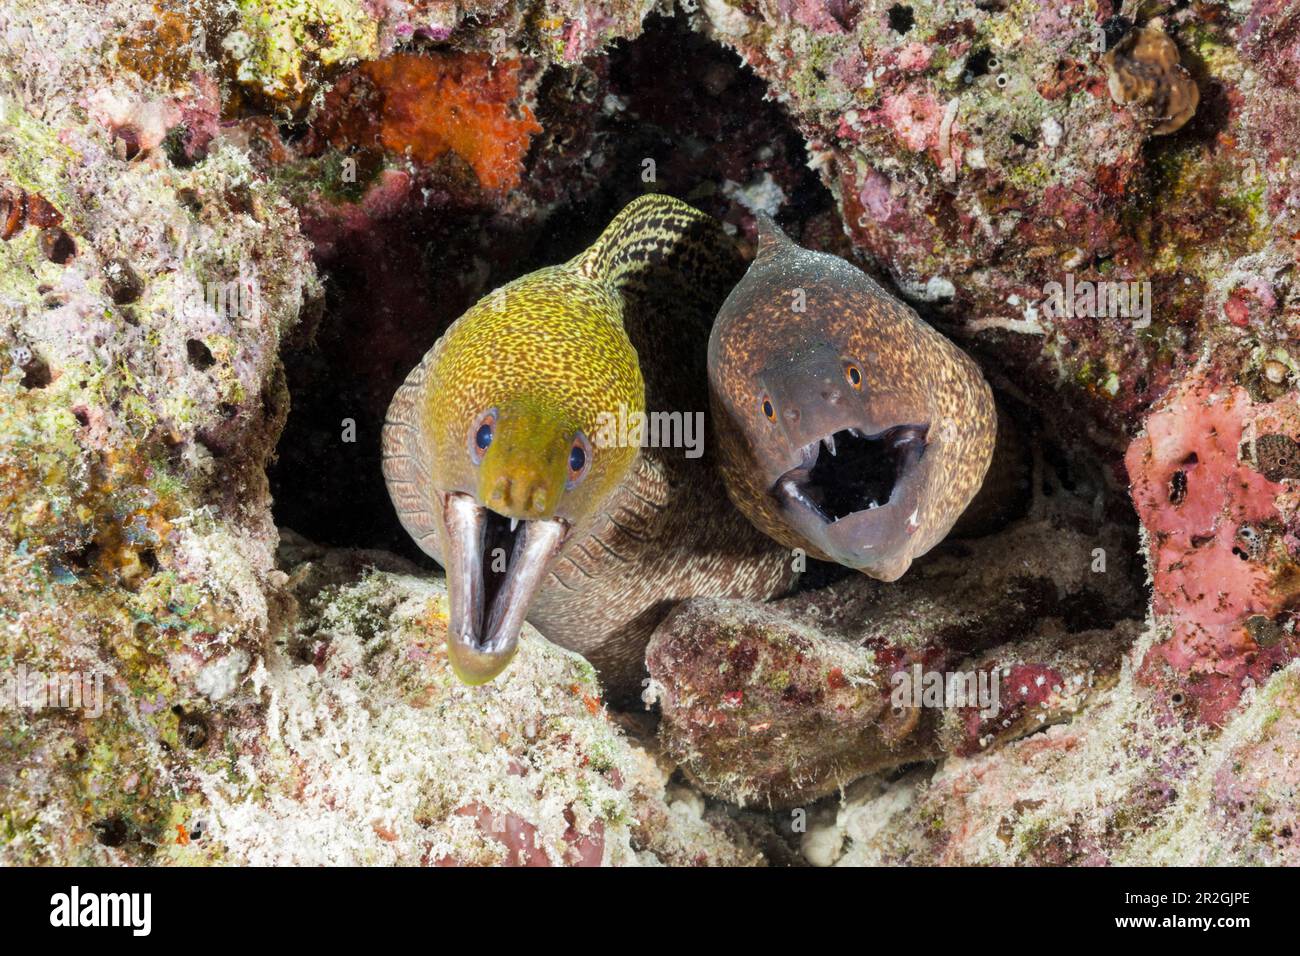 Yellow-spotted moray eel and giant moray eel, Gymnothorax flavimarginatus, Gymnothorax javanicus, North Male Atoll, Indian Ocean, Maldives Stock Photo